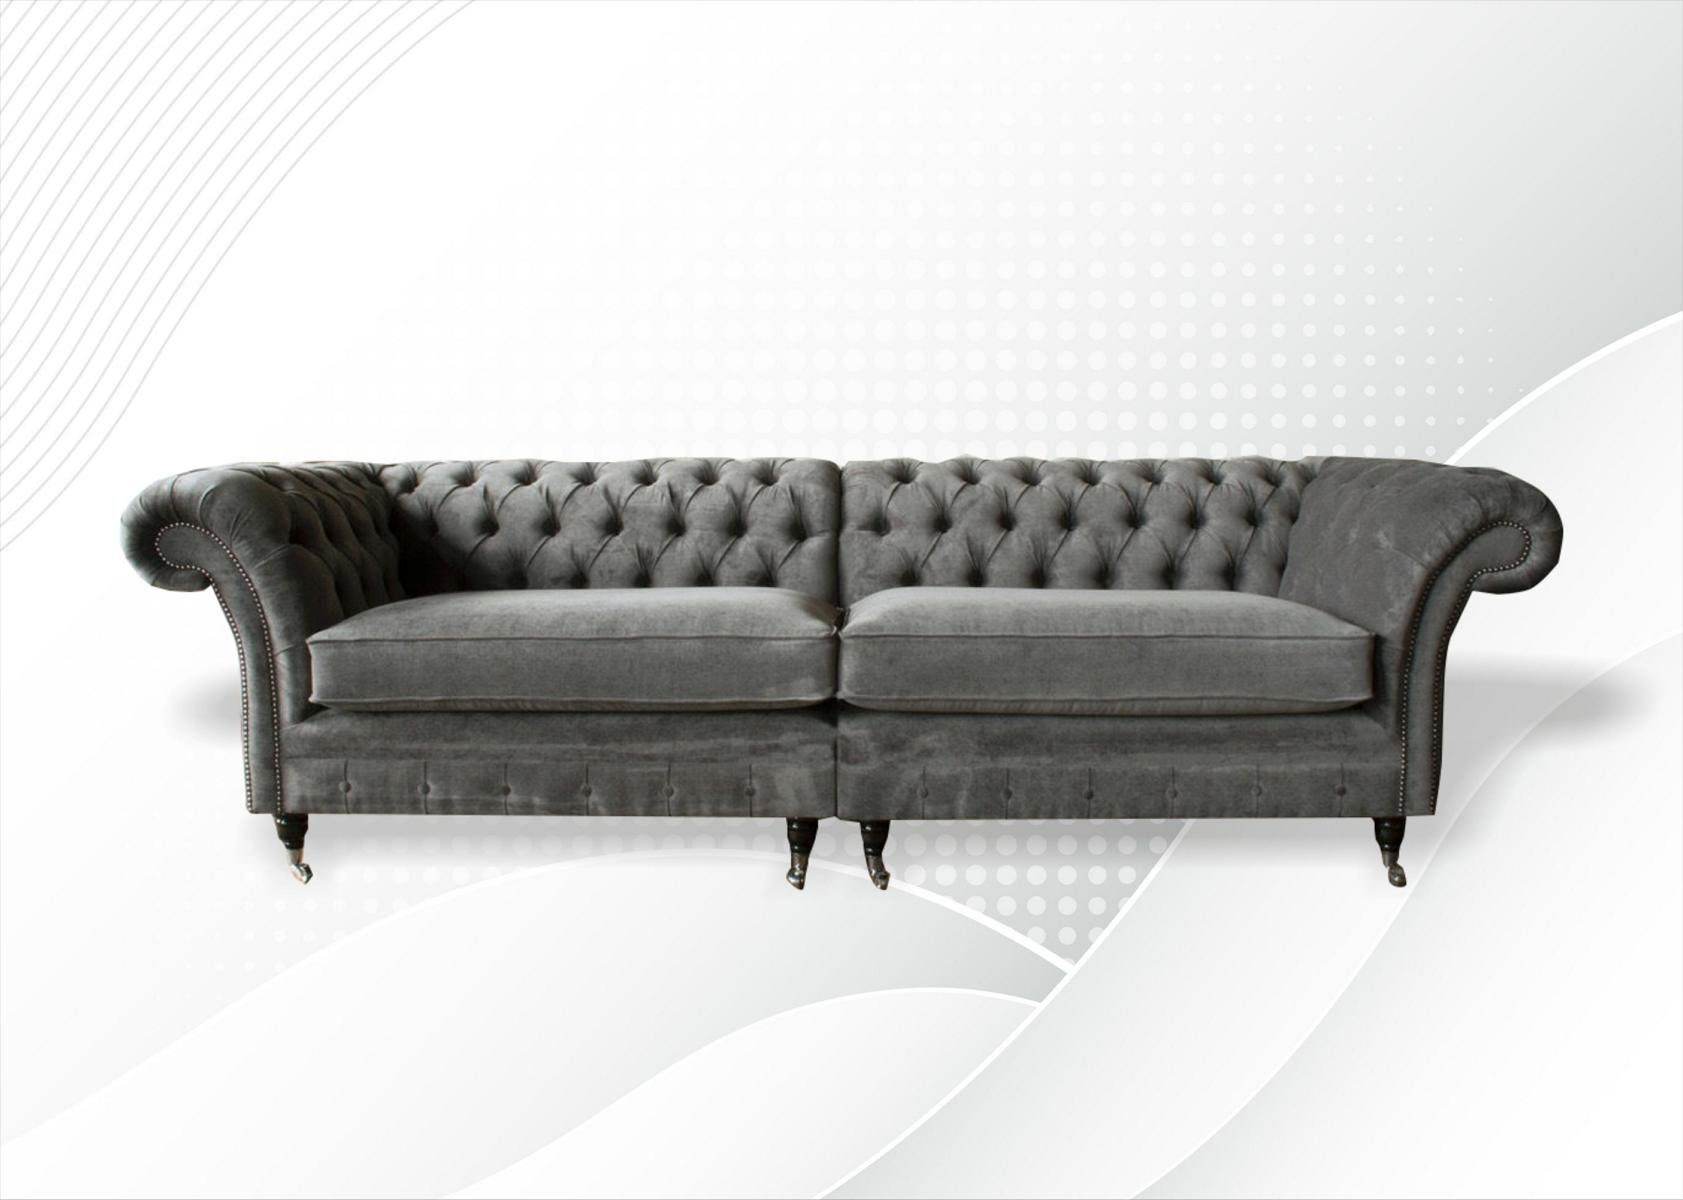 4 JVmoebel Made Sofa Chesterfield Garnitur in Europe Couch xxl Sitz Sofa Sitzer Polster Graue,